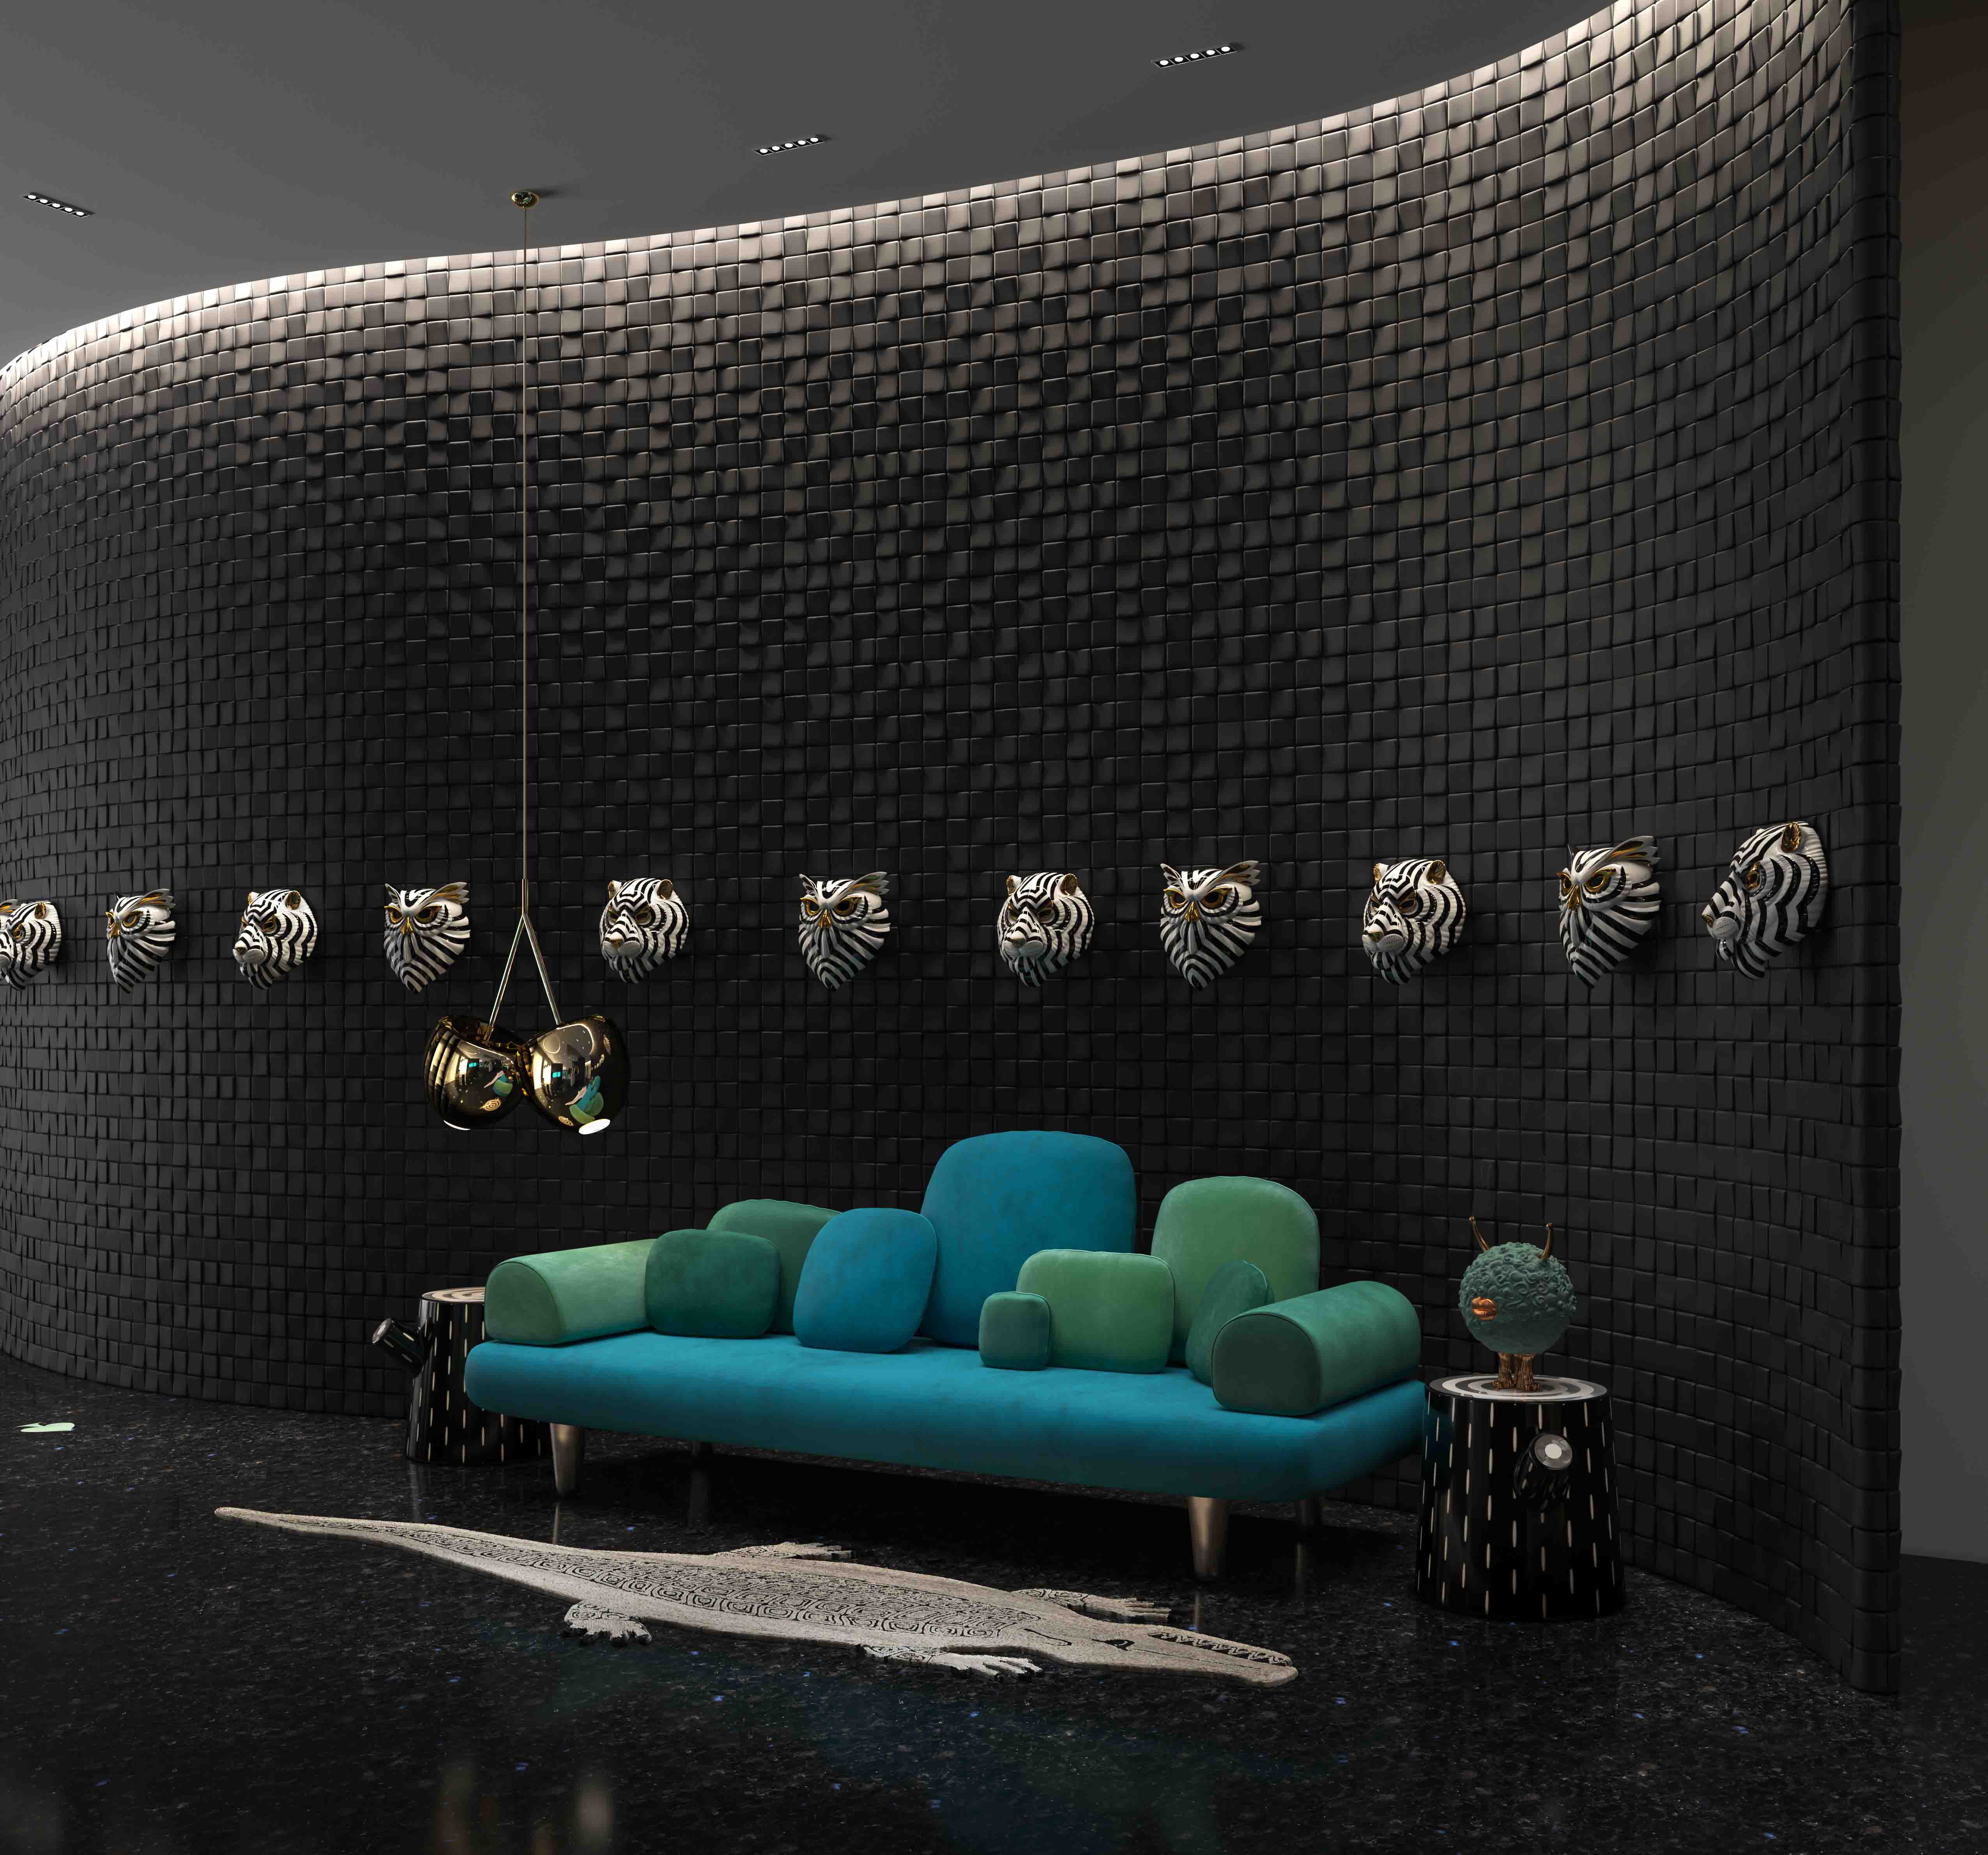 Sanjyt Syngh And Scarlet Splendour create a strikingly stylish entry lounge